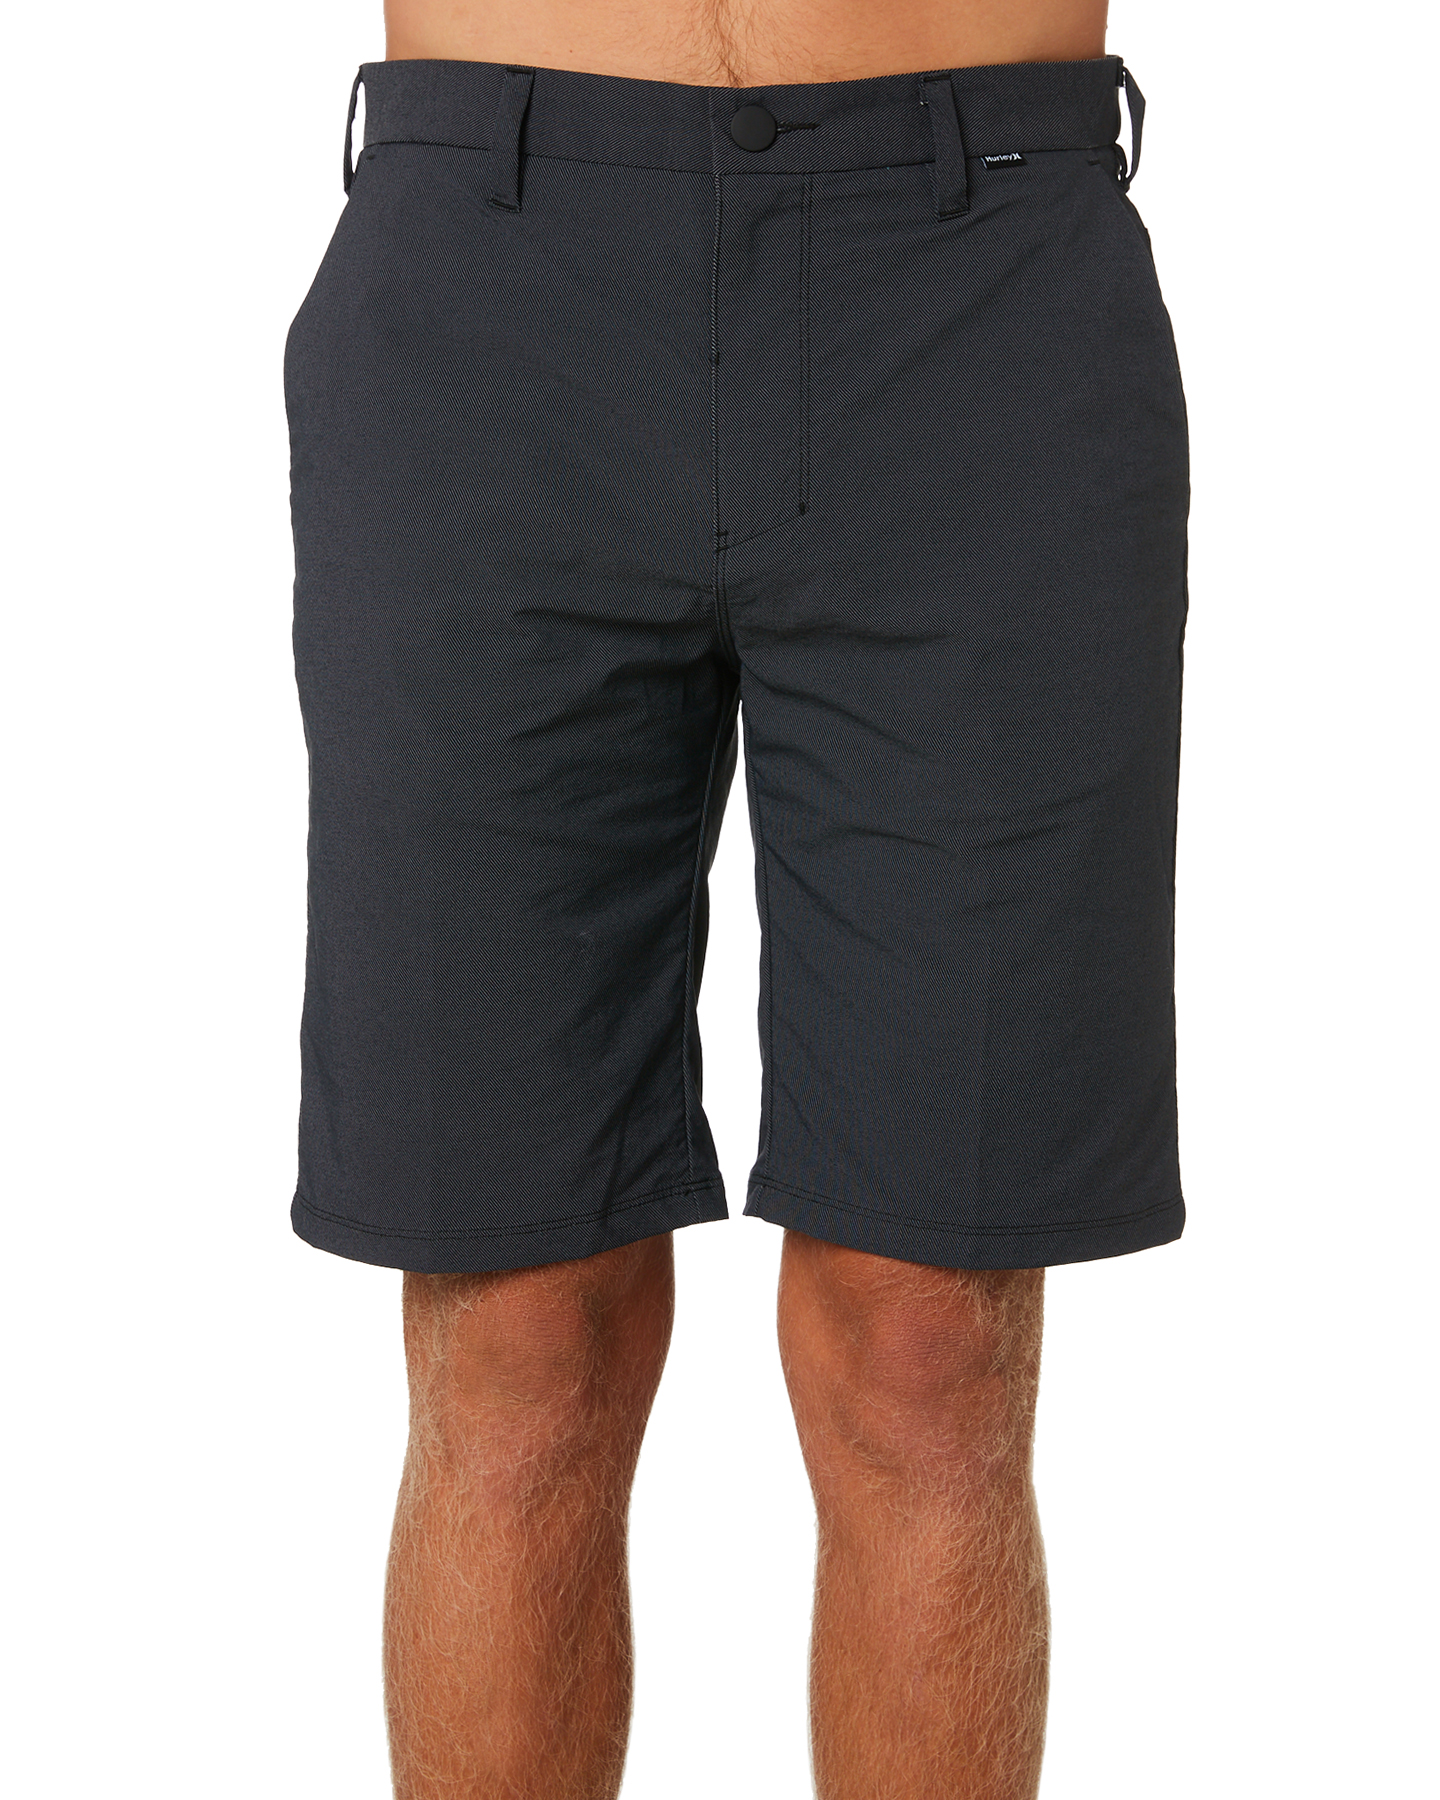 hurley dri fit shorts sale